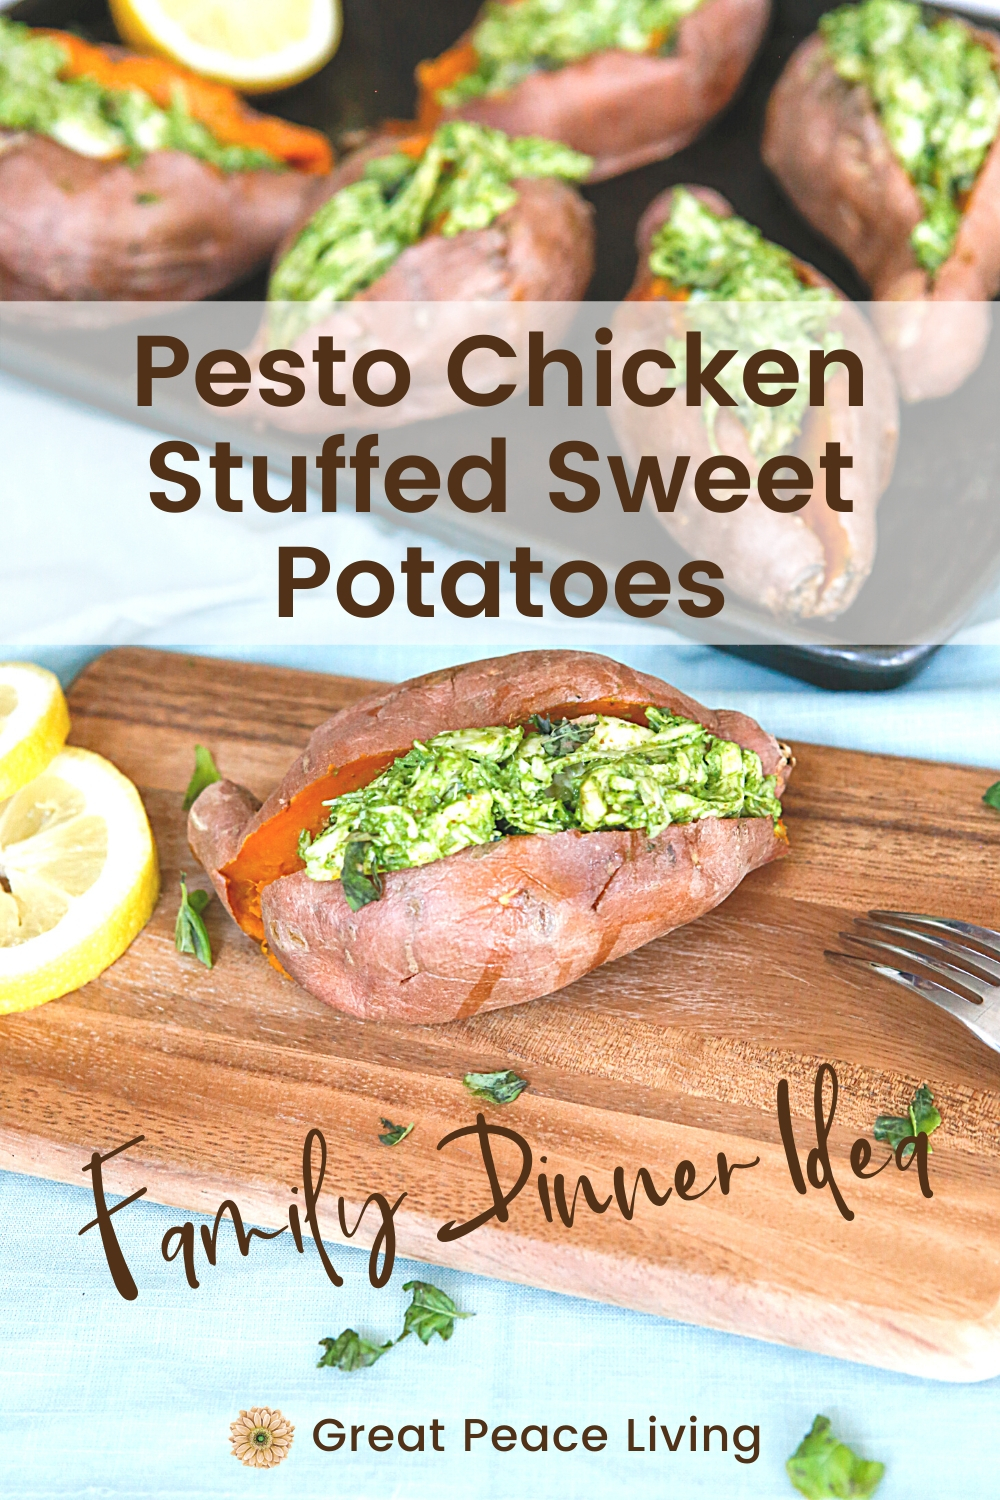 Pesto Chicken Stuffed Sweet Potatoes | Family Dinner Idea via Great Peace Living #mealplanning #dinnerideas #sweetpotatoes #recipe #pestochicken #dinner